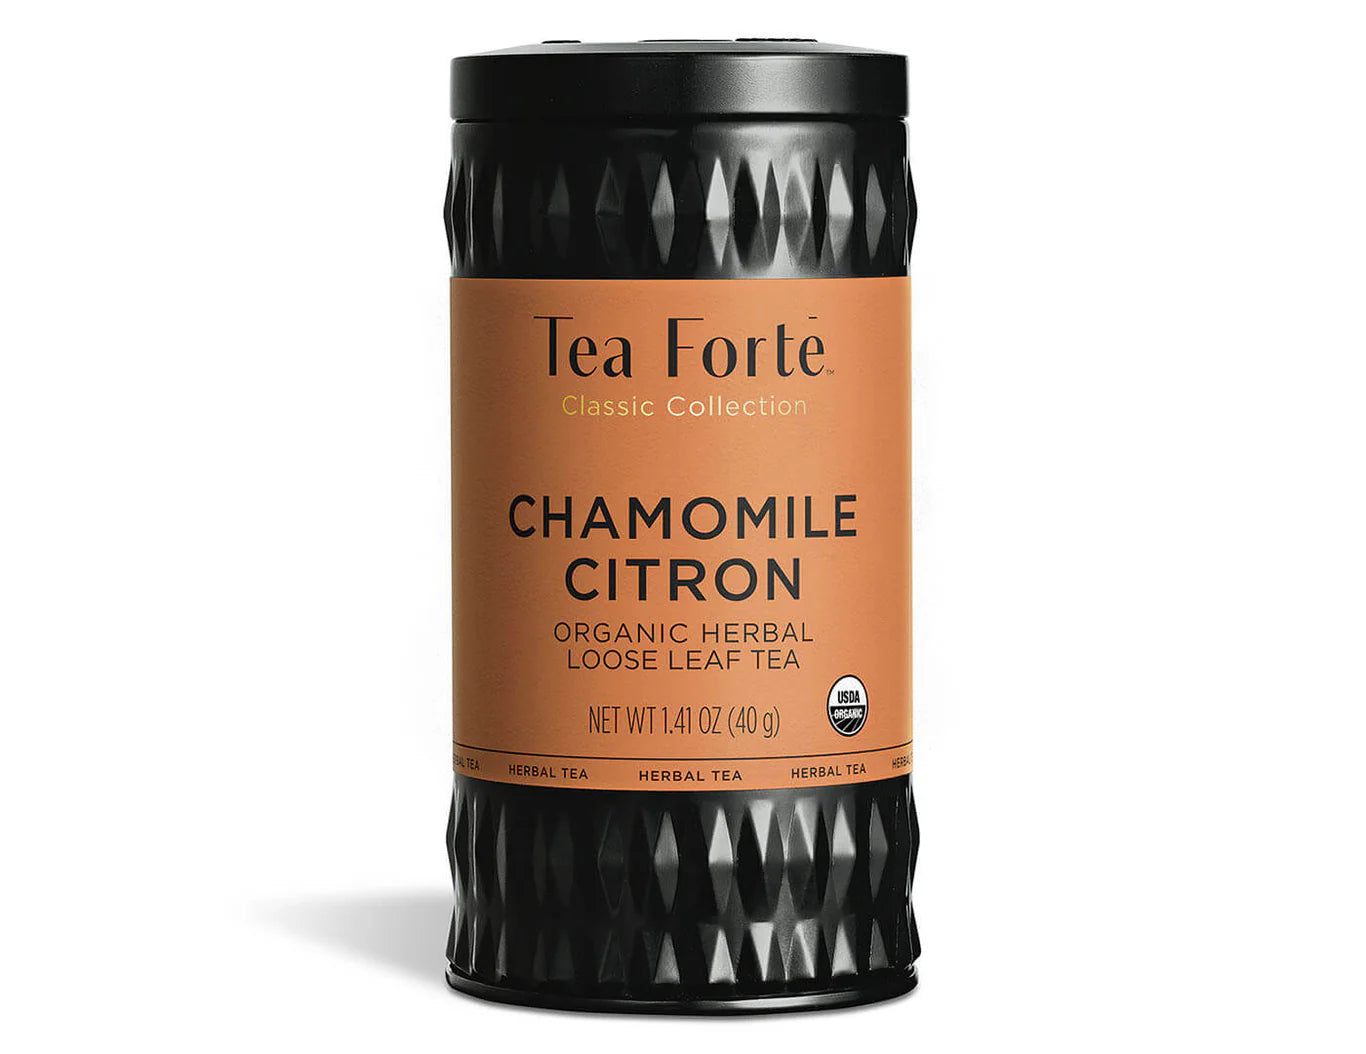 TEA FORTE CHAMOMILE CITRON